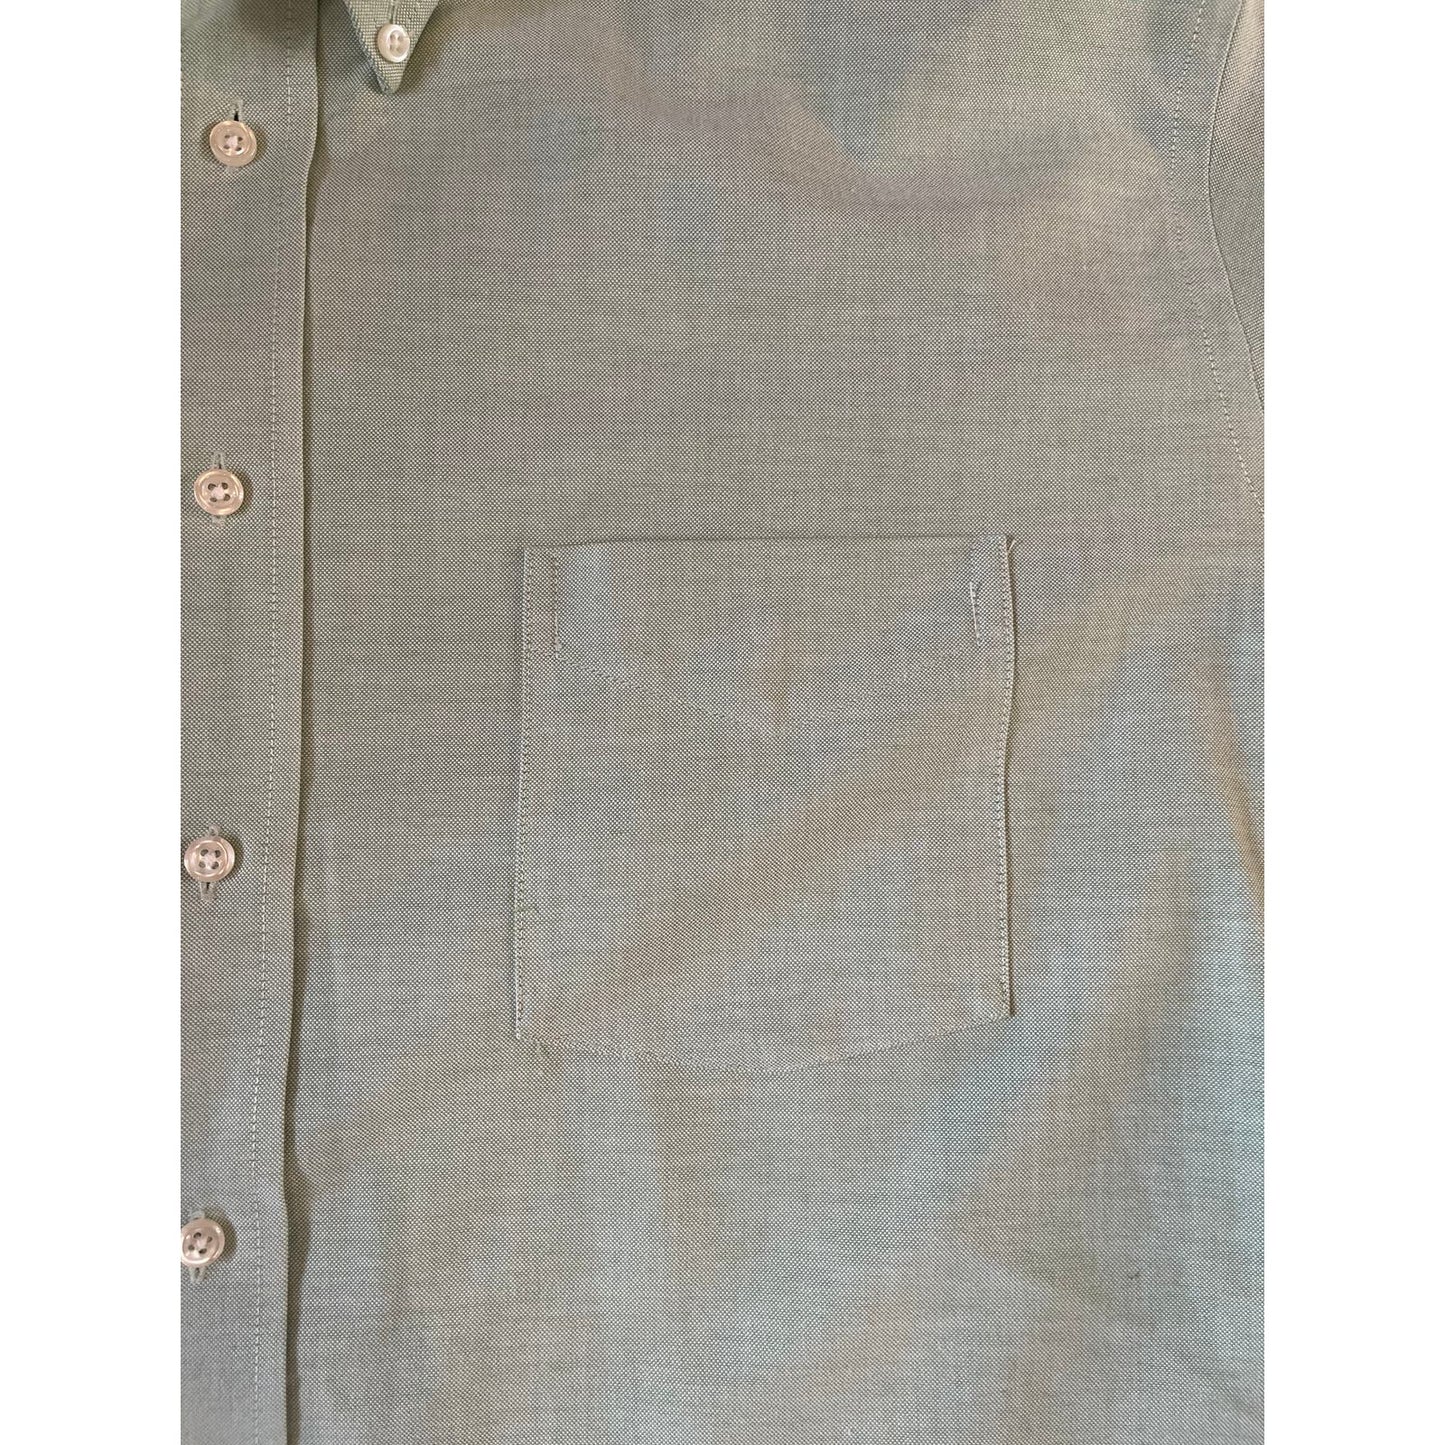 Vintage Stafford Cotton Blend Oxford Green Long Sleeve Shirt Men's 18 36/37